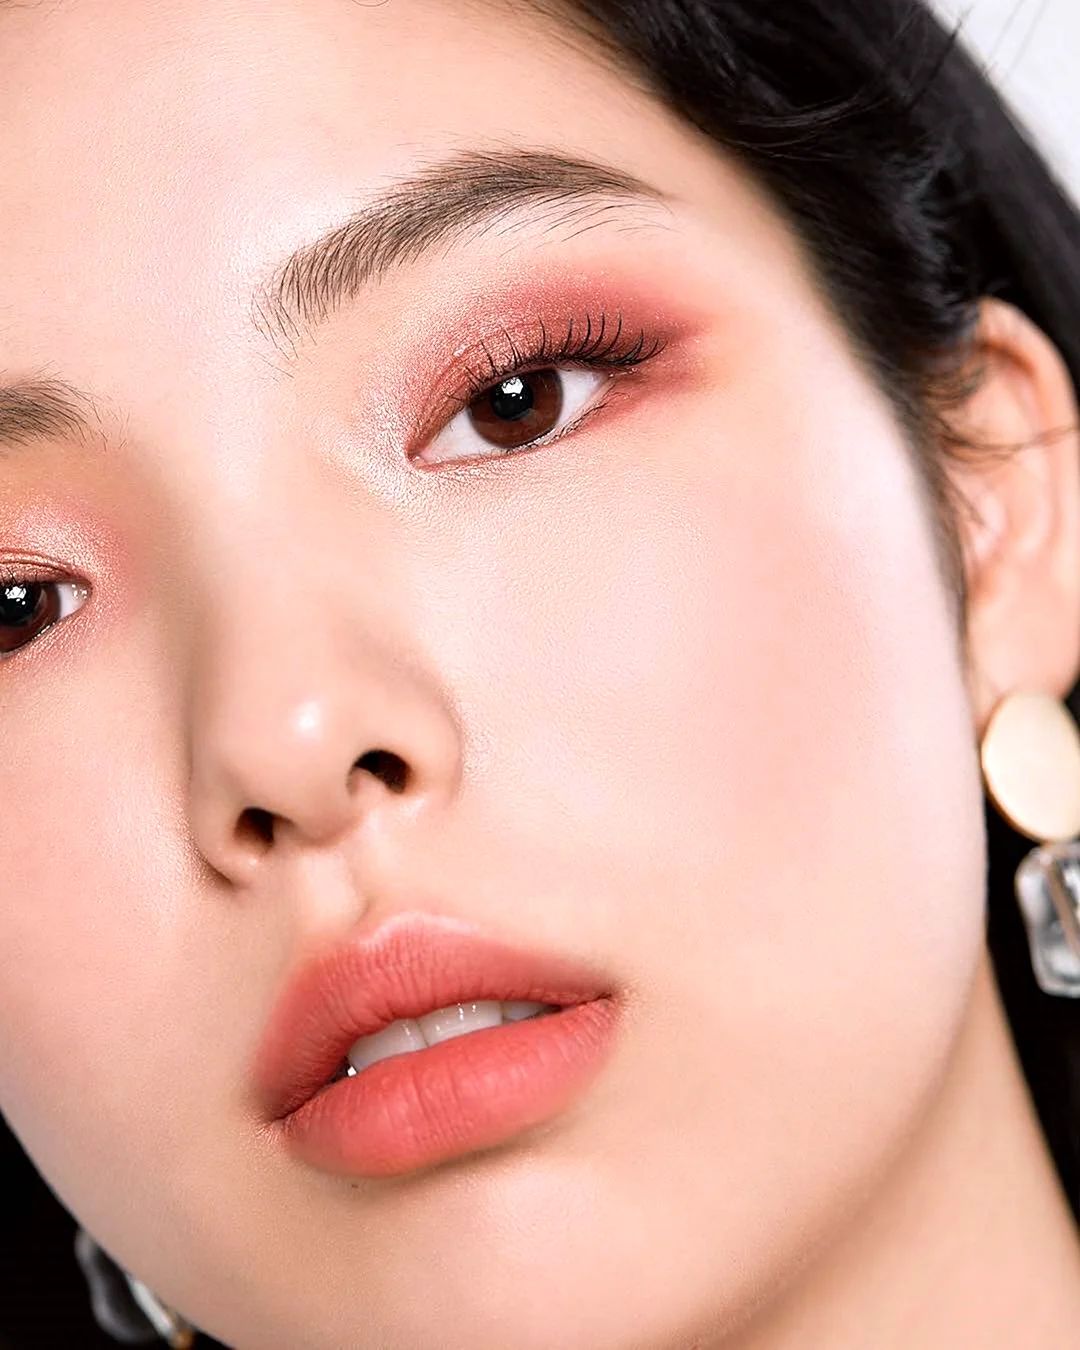 Корейский макияж глаз